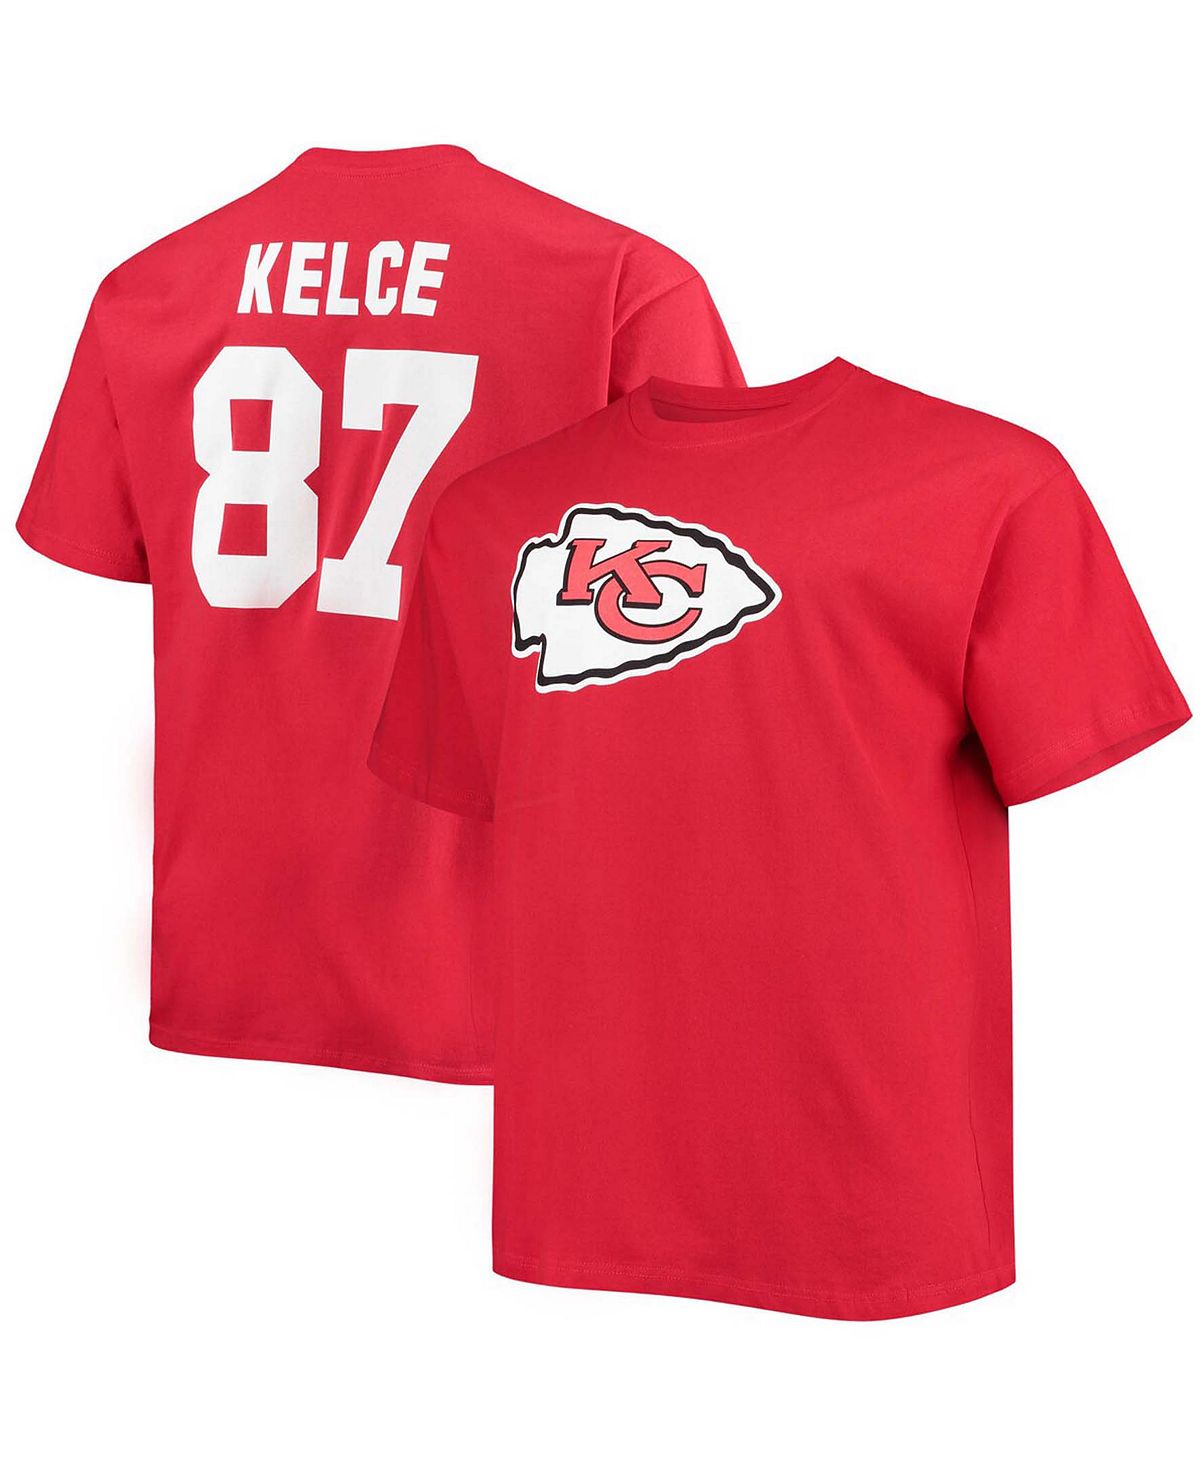 Мужская красная футболка Big and Tall Travis Kelce Kansas City Chiefs с именем игрока и номером Fanatics kaiser chiefs kaiser chiefs duck